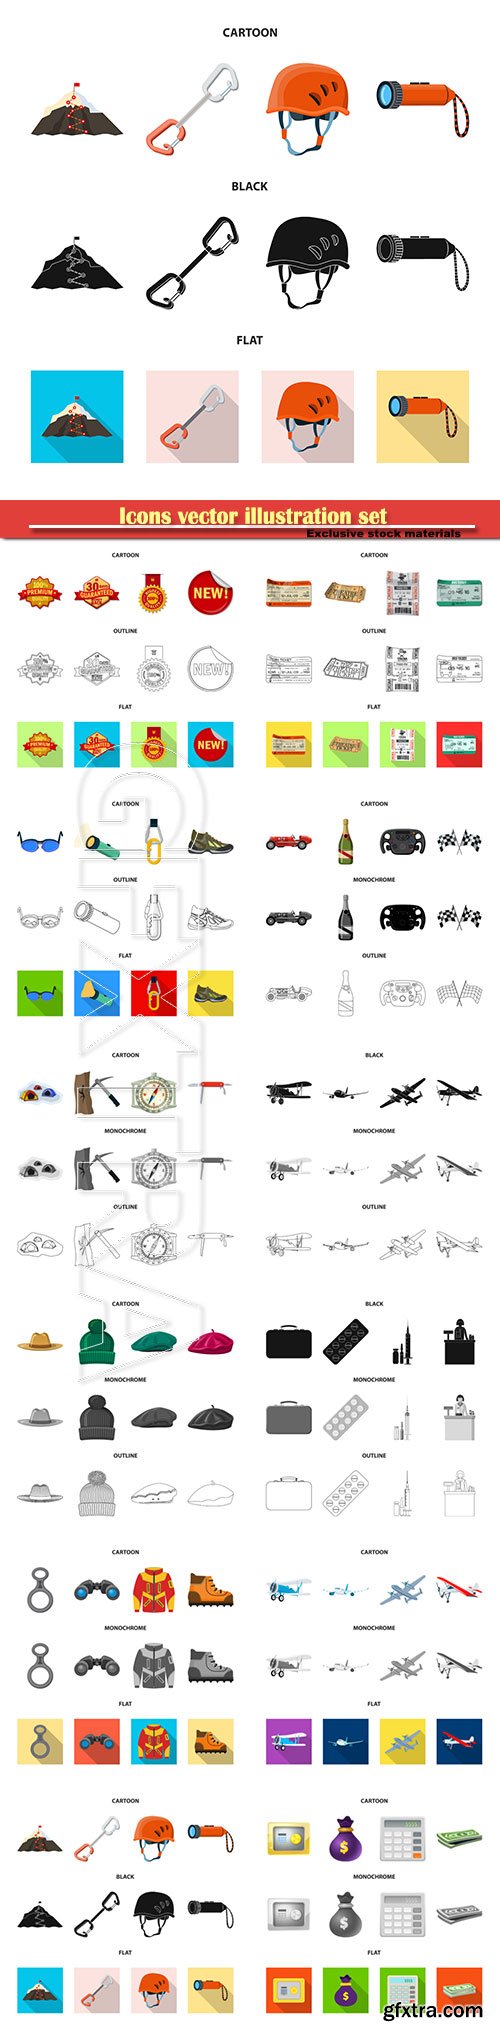 Icons vector illustration set # 10